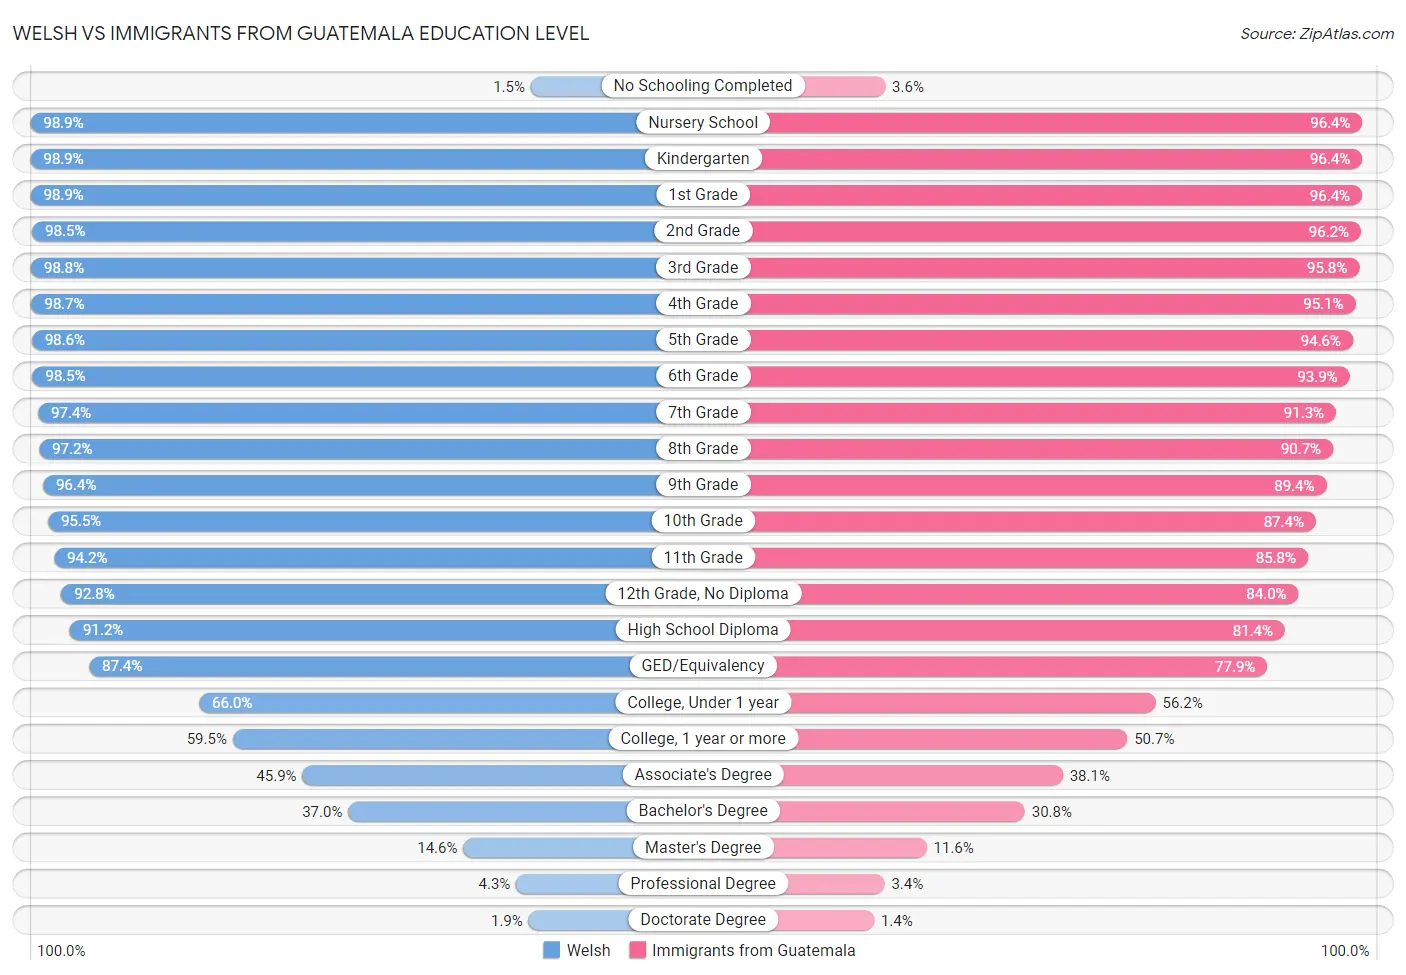 Welsh vs Immigrants from Guatemala Education Level